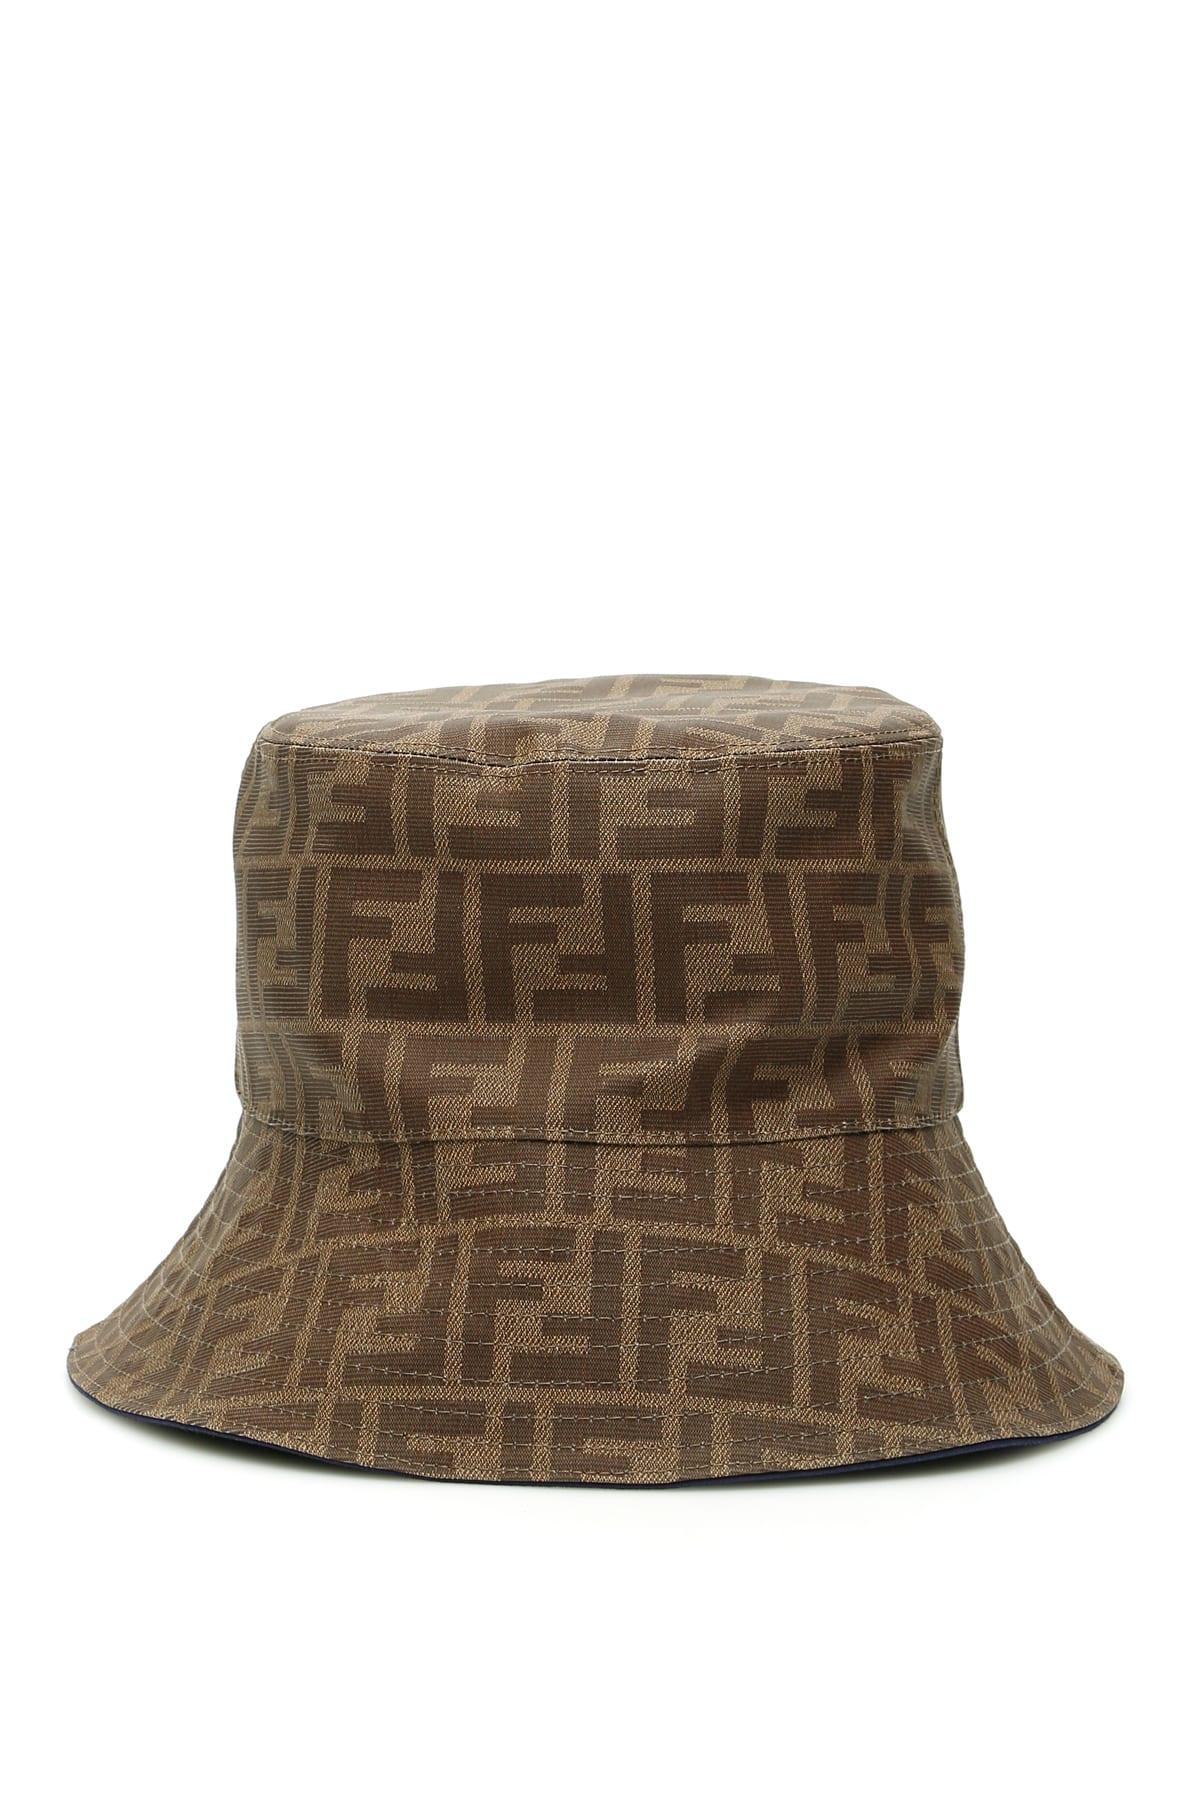 Fendi Reversible Ff Bucket Hat in (Brown) Men - Lyst